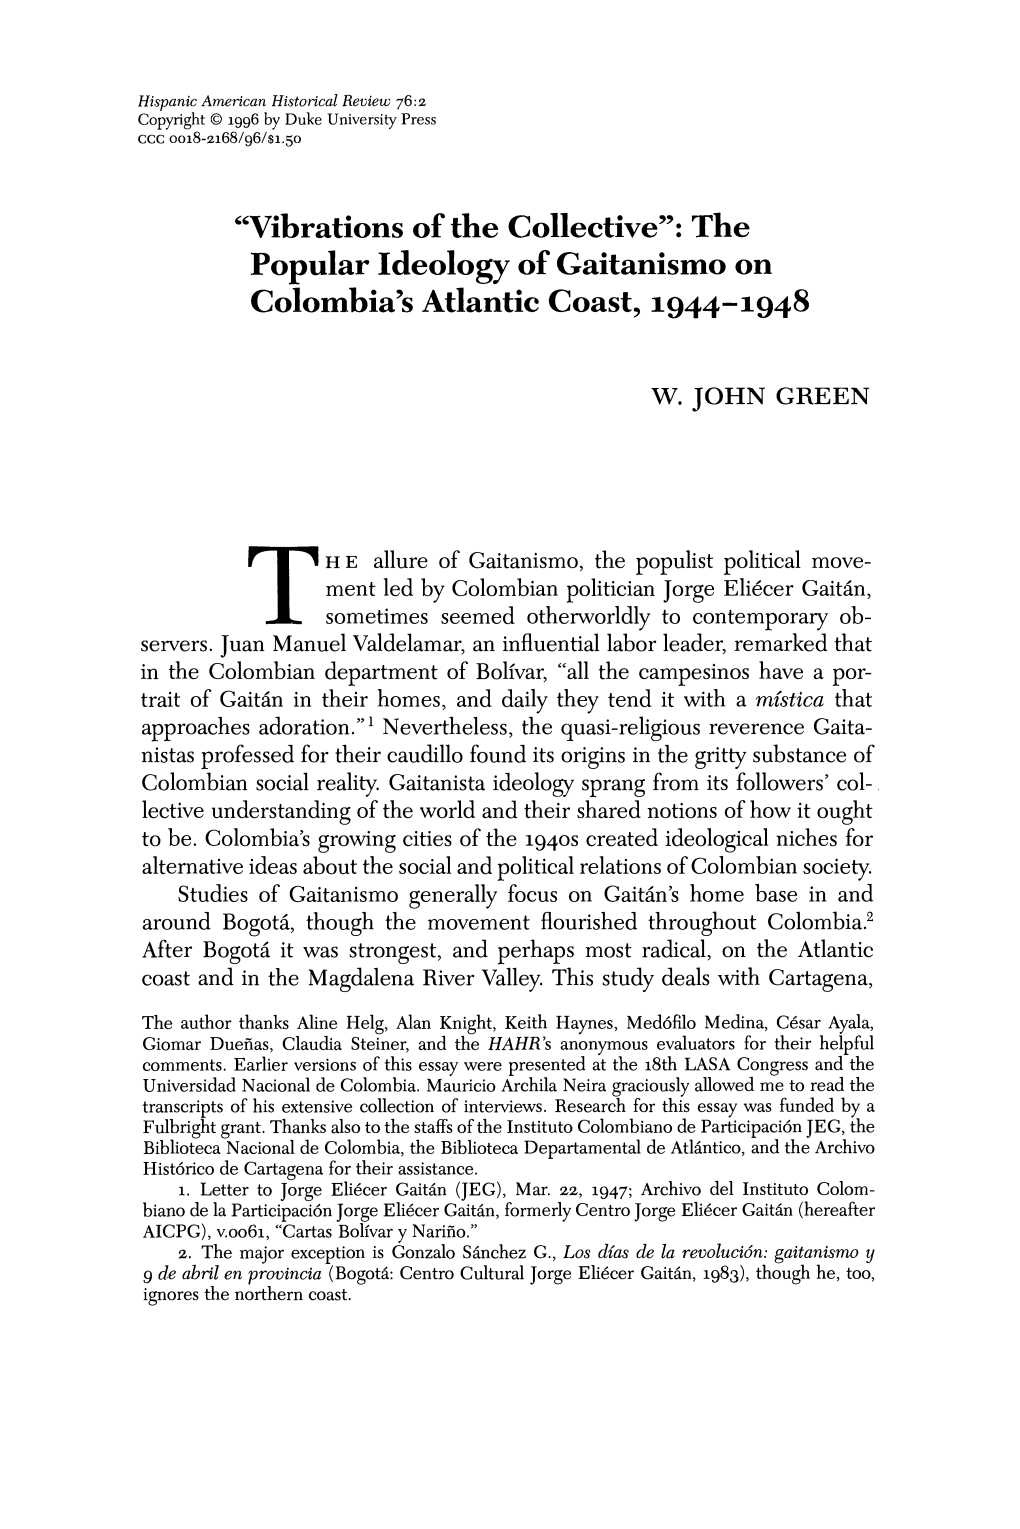 The Popular Ideology of Gaitanismo on Colombia's Atlantic Coast, 1944-1948